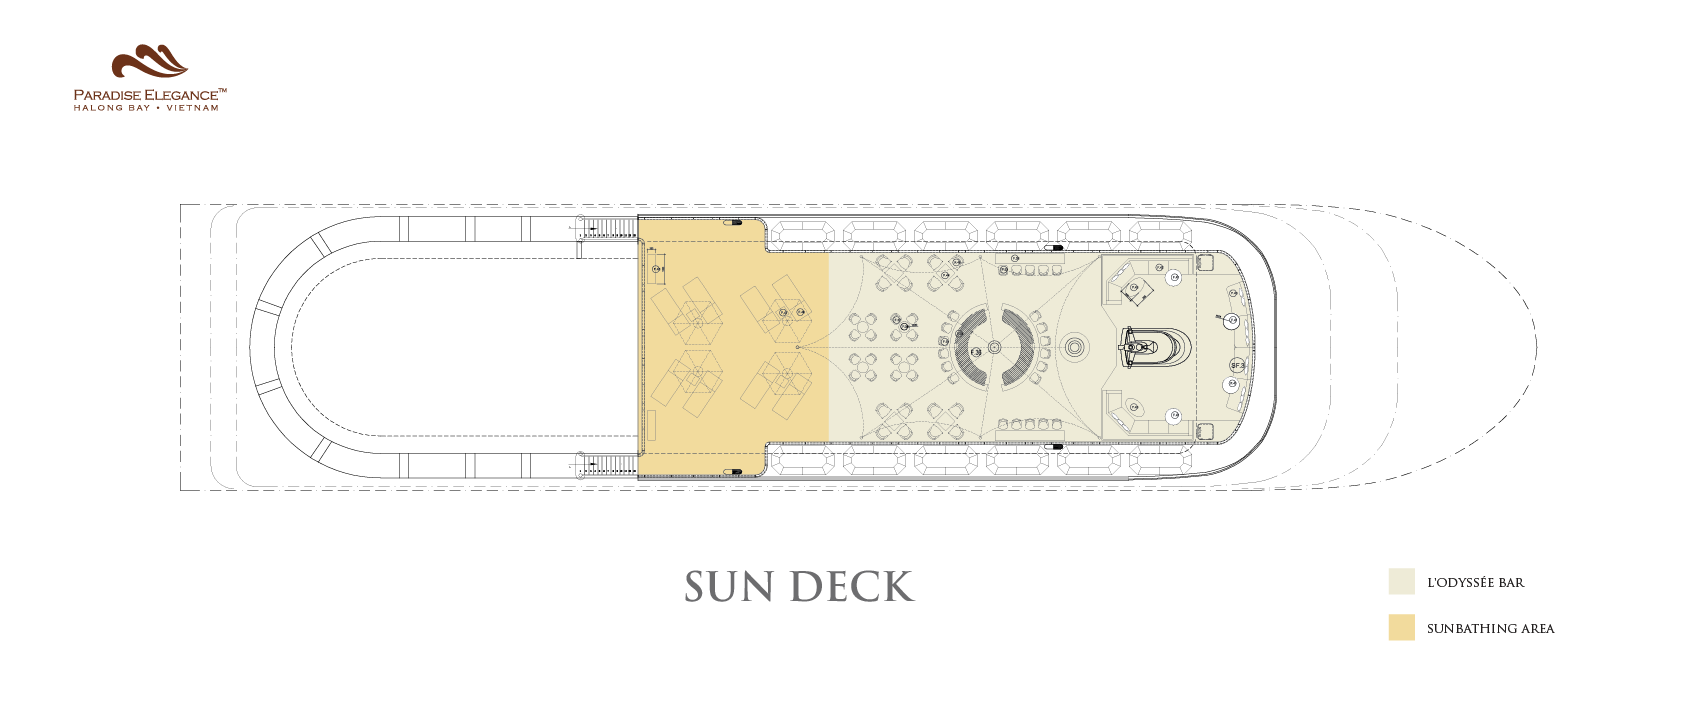 Paradise Elegance Cruise Sun Deck